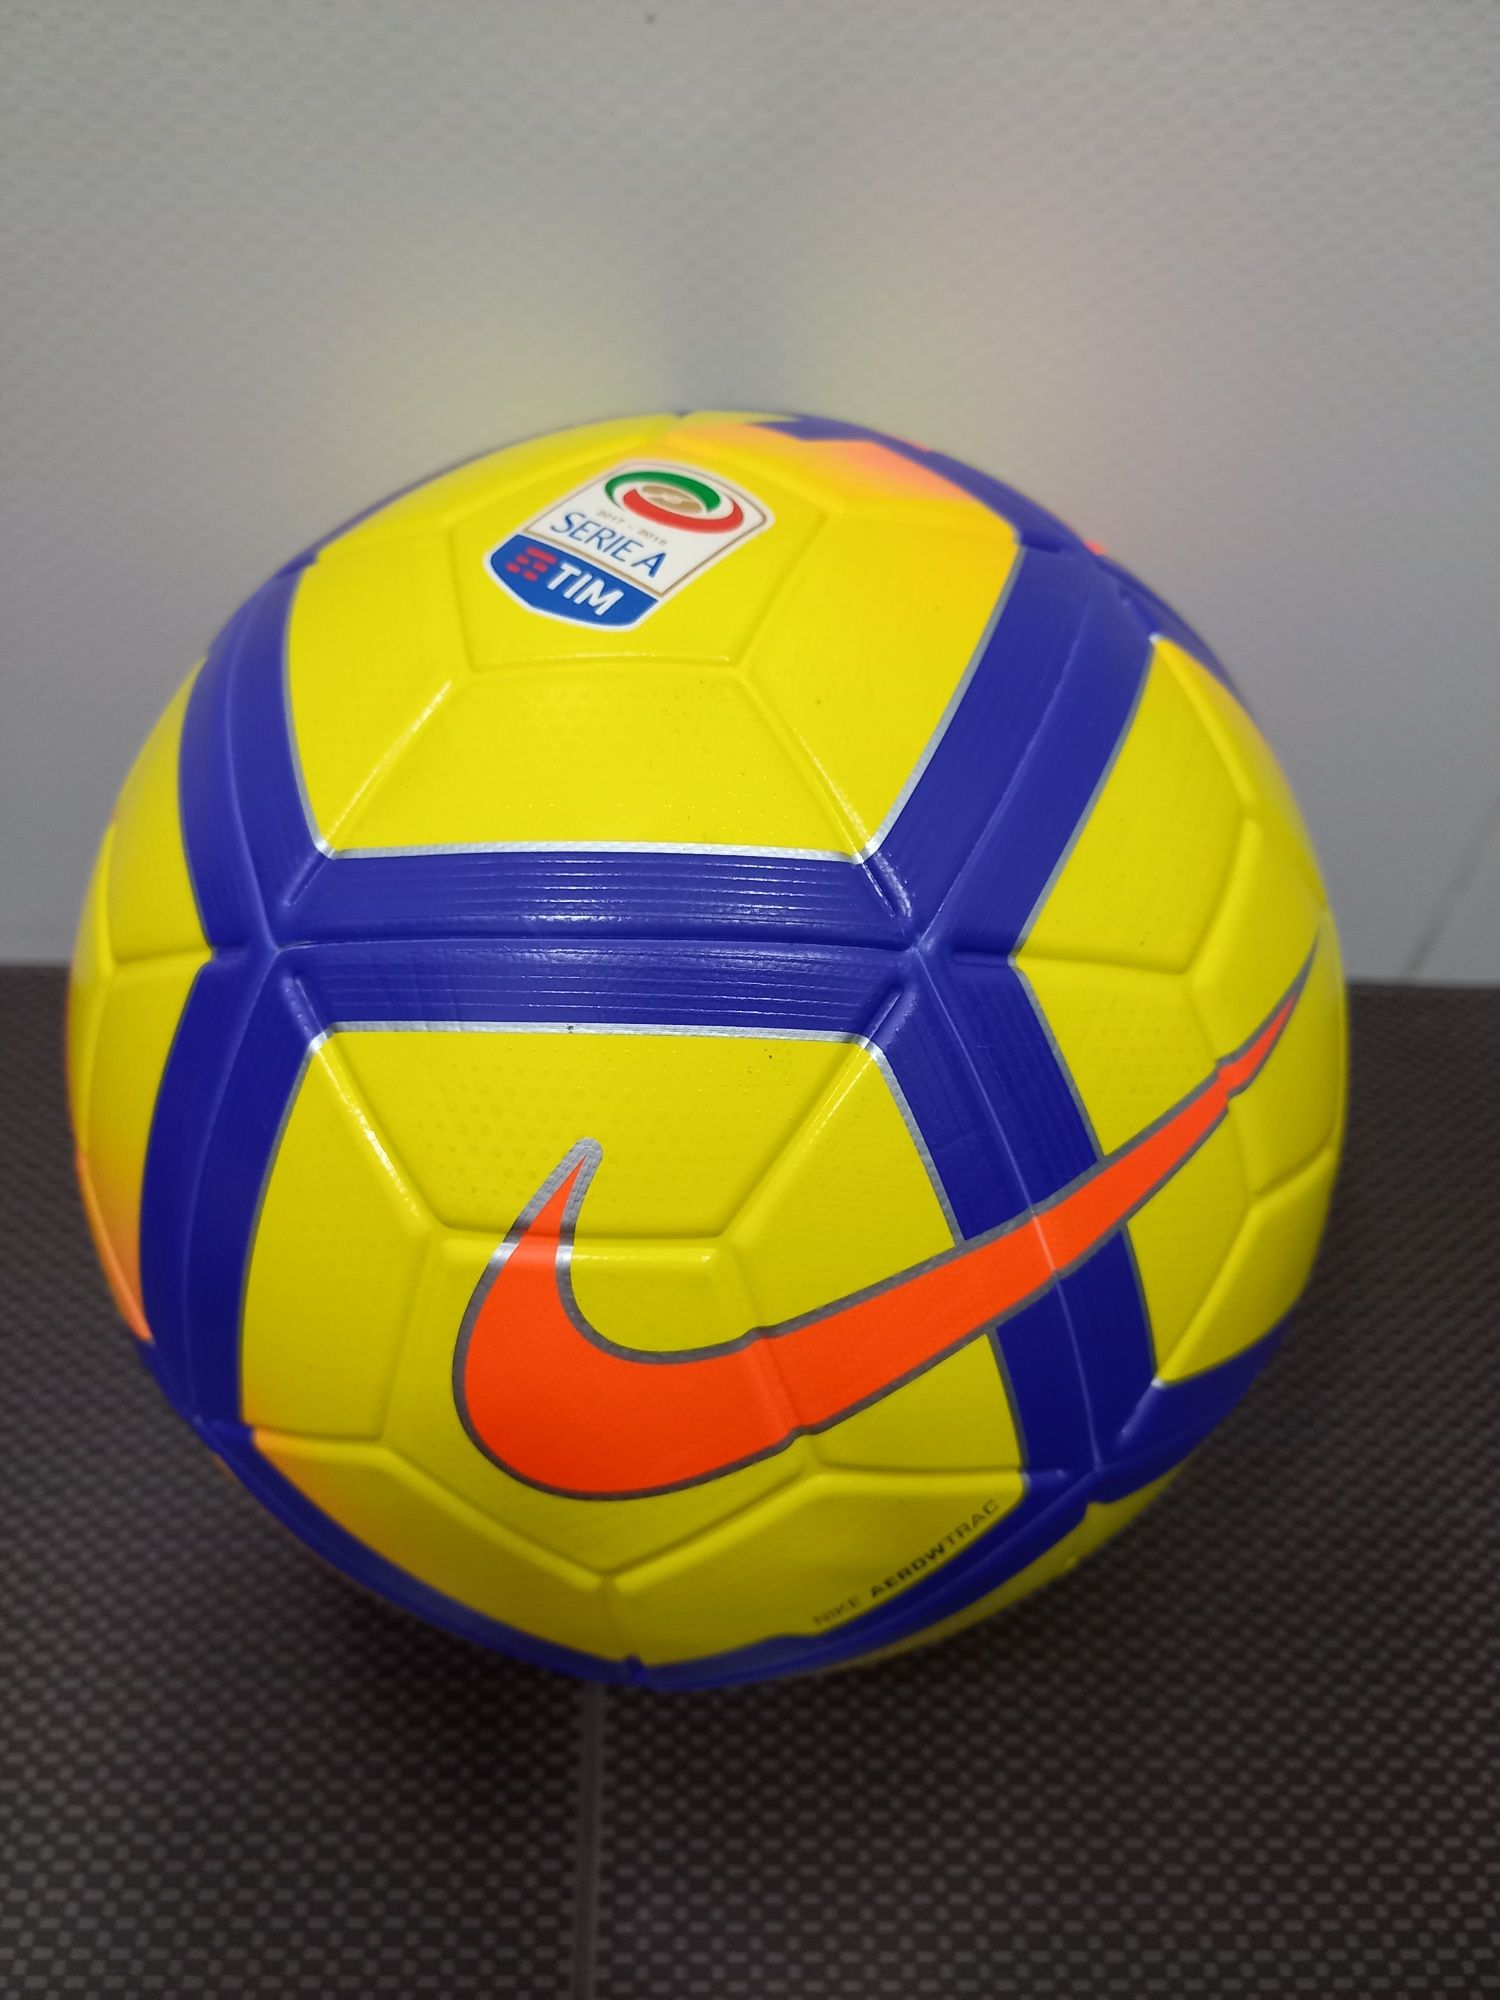 Мяч Nike Ordem Serie A